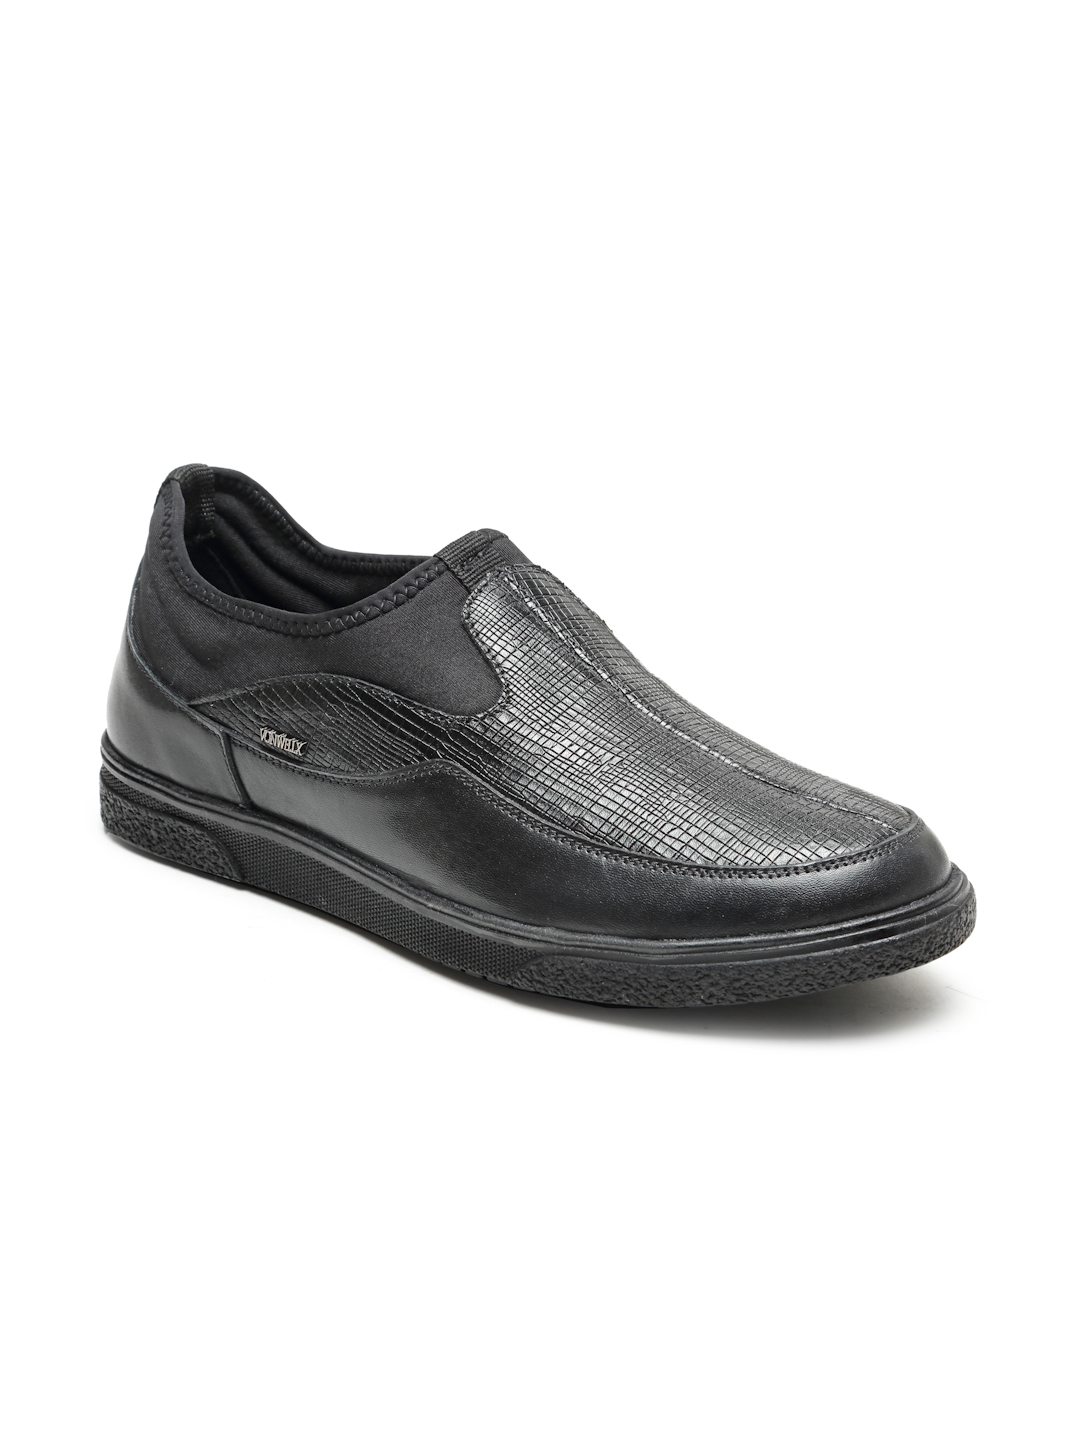 Buy Von Wellx Germany Comfort Men's Black Casual Loafers Everett Online in Telangana